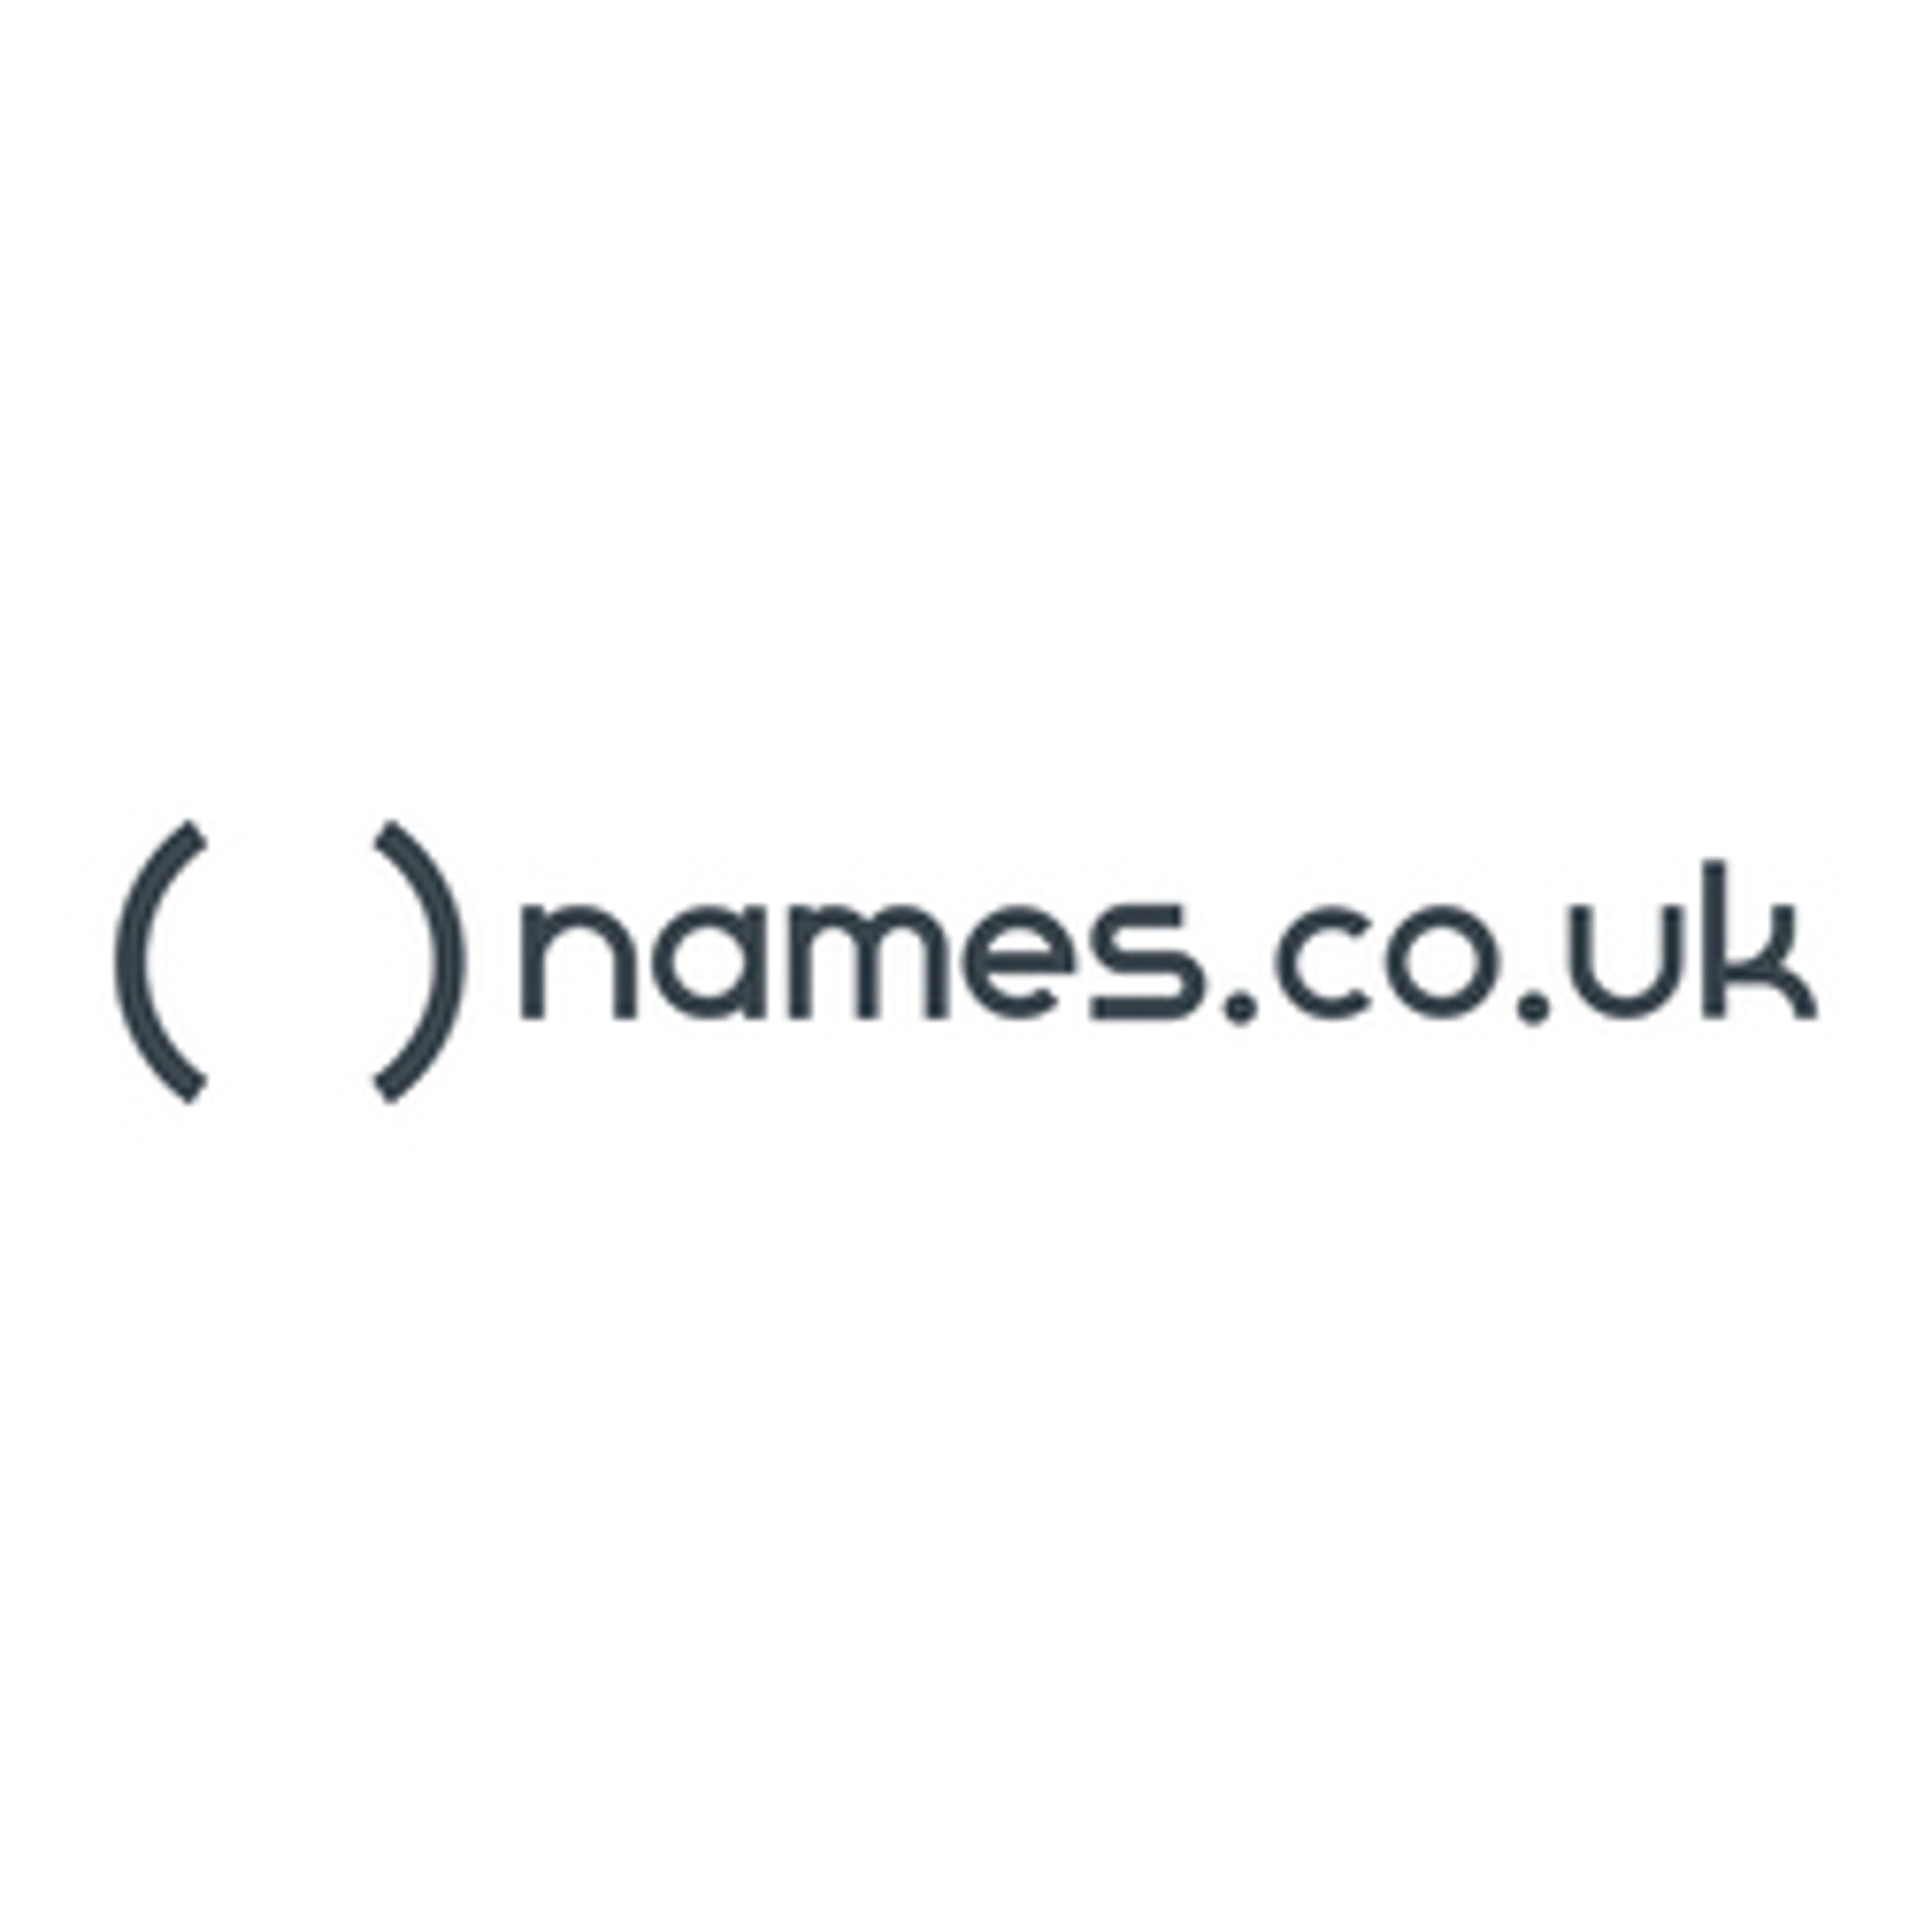 CO.UK Domain Names